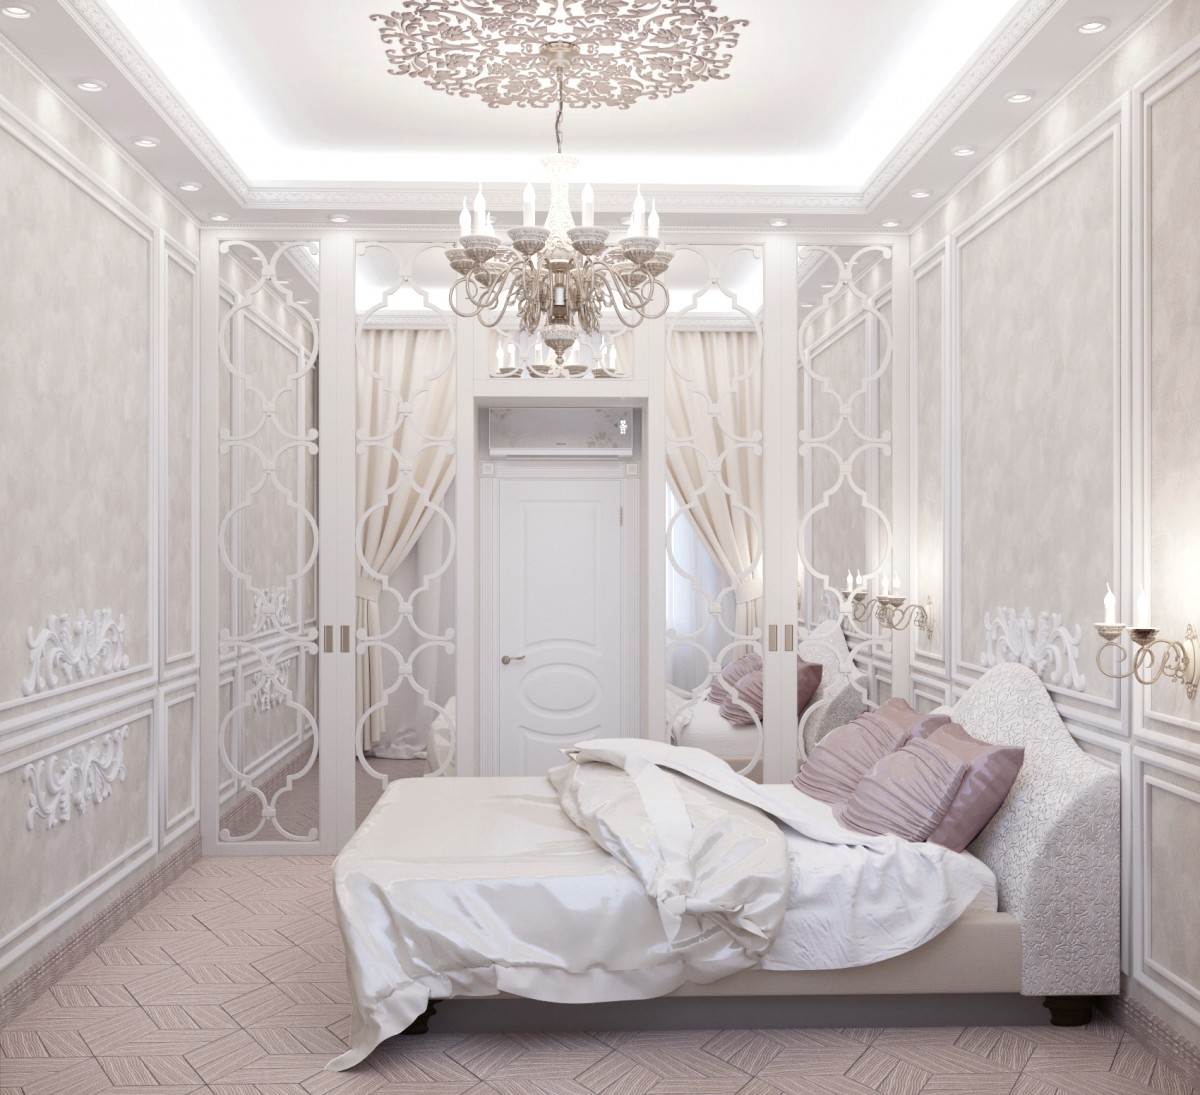 Квартира в стиле классика в белом цвете своими руками